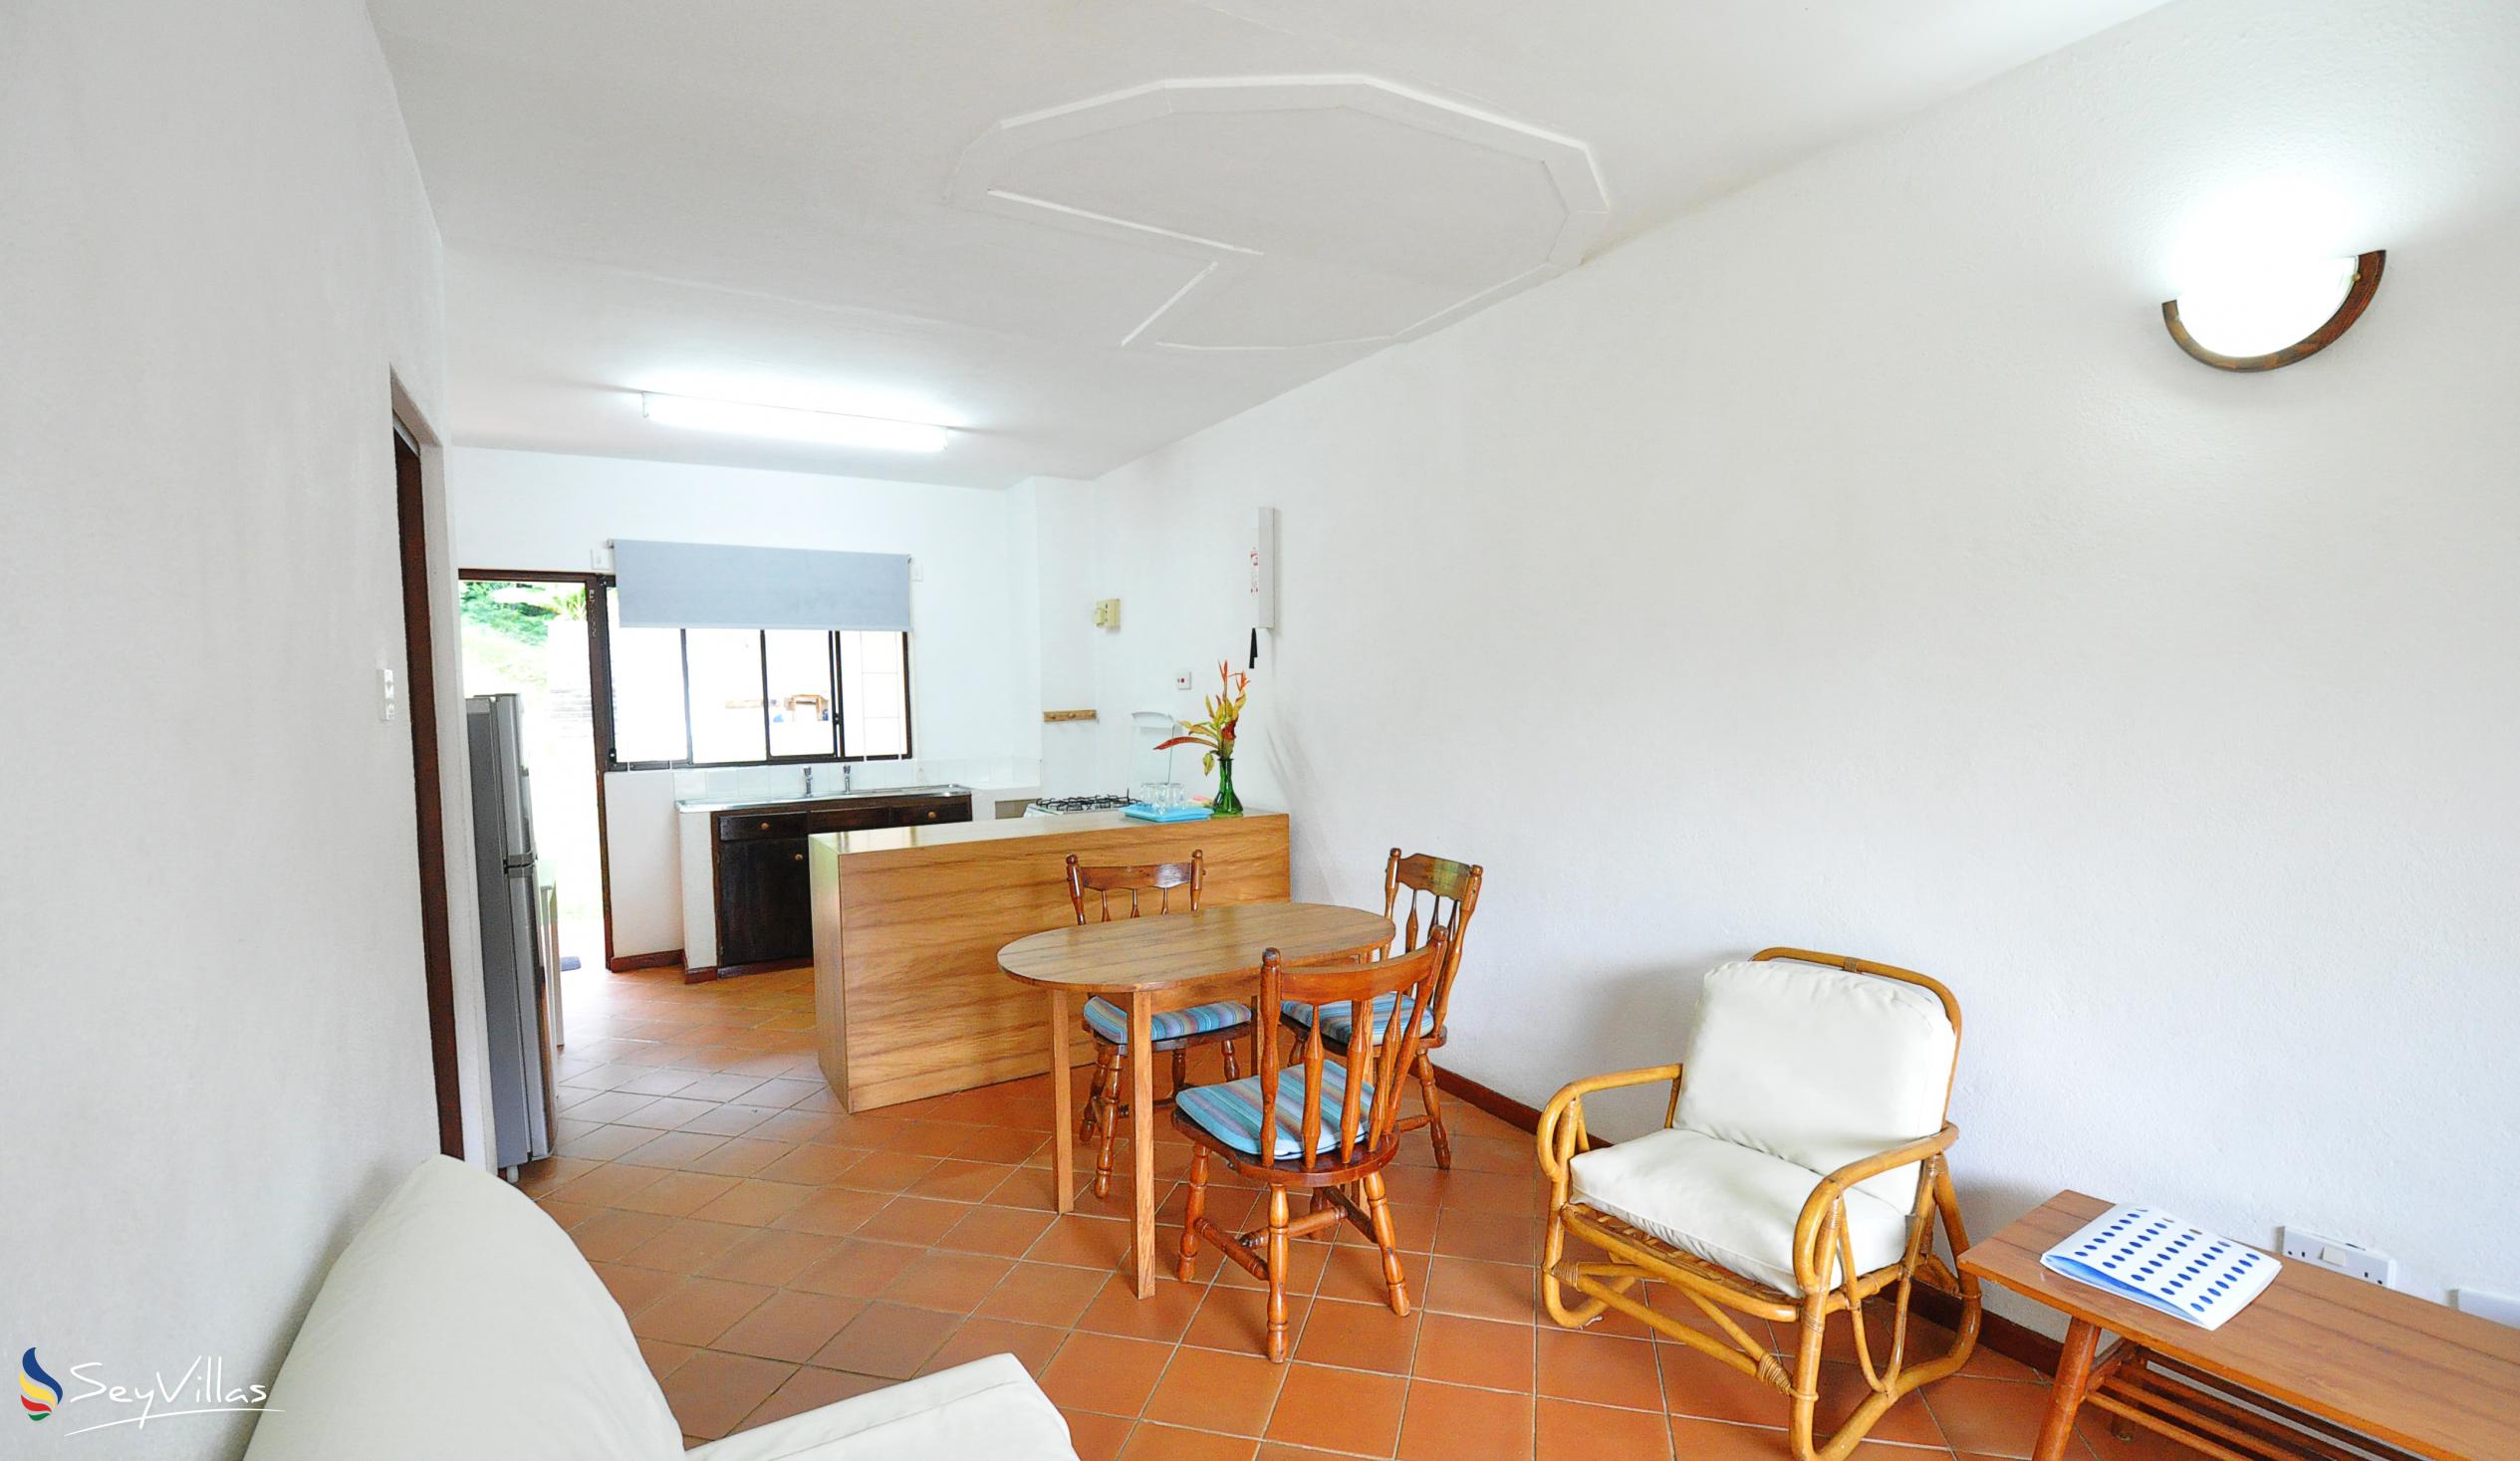 Foto 19: La Résidence - Appartement Erdgeschoss - Mahé (Seychellen)